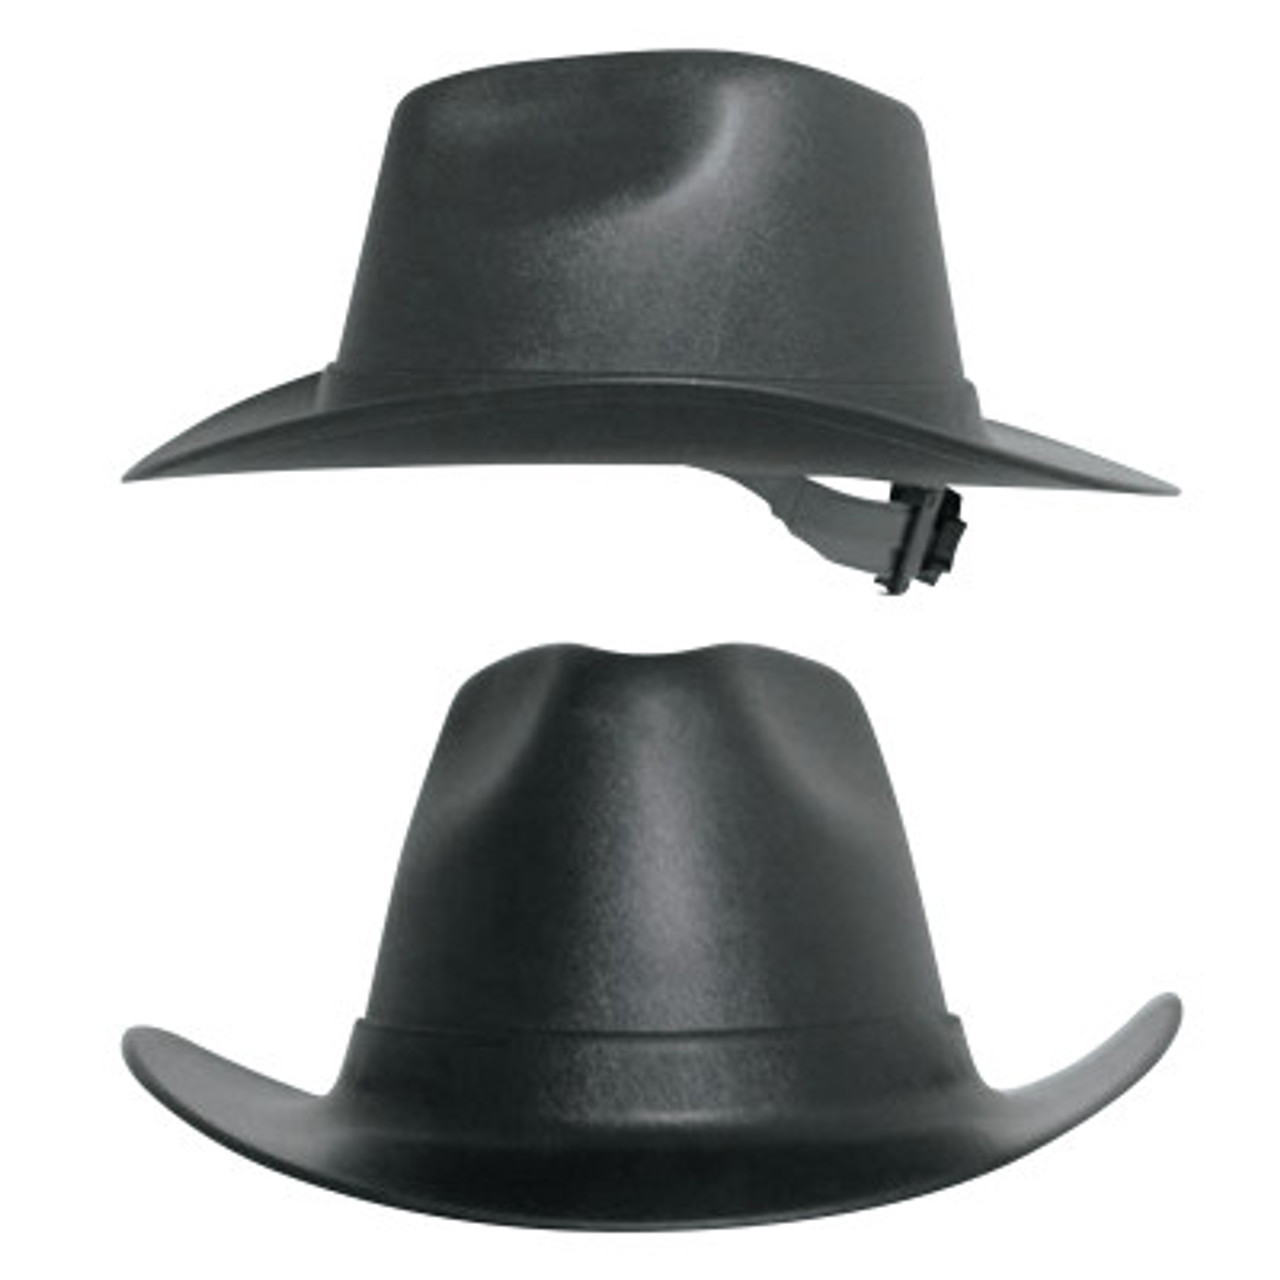 OccuNomix Vulcan Cowboy Hard Hat Black #VCB20006